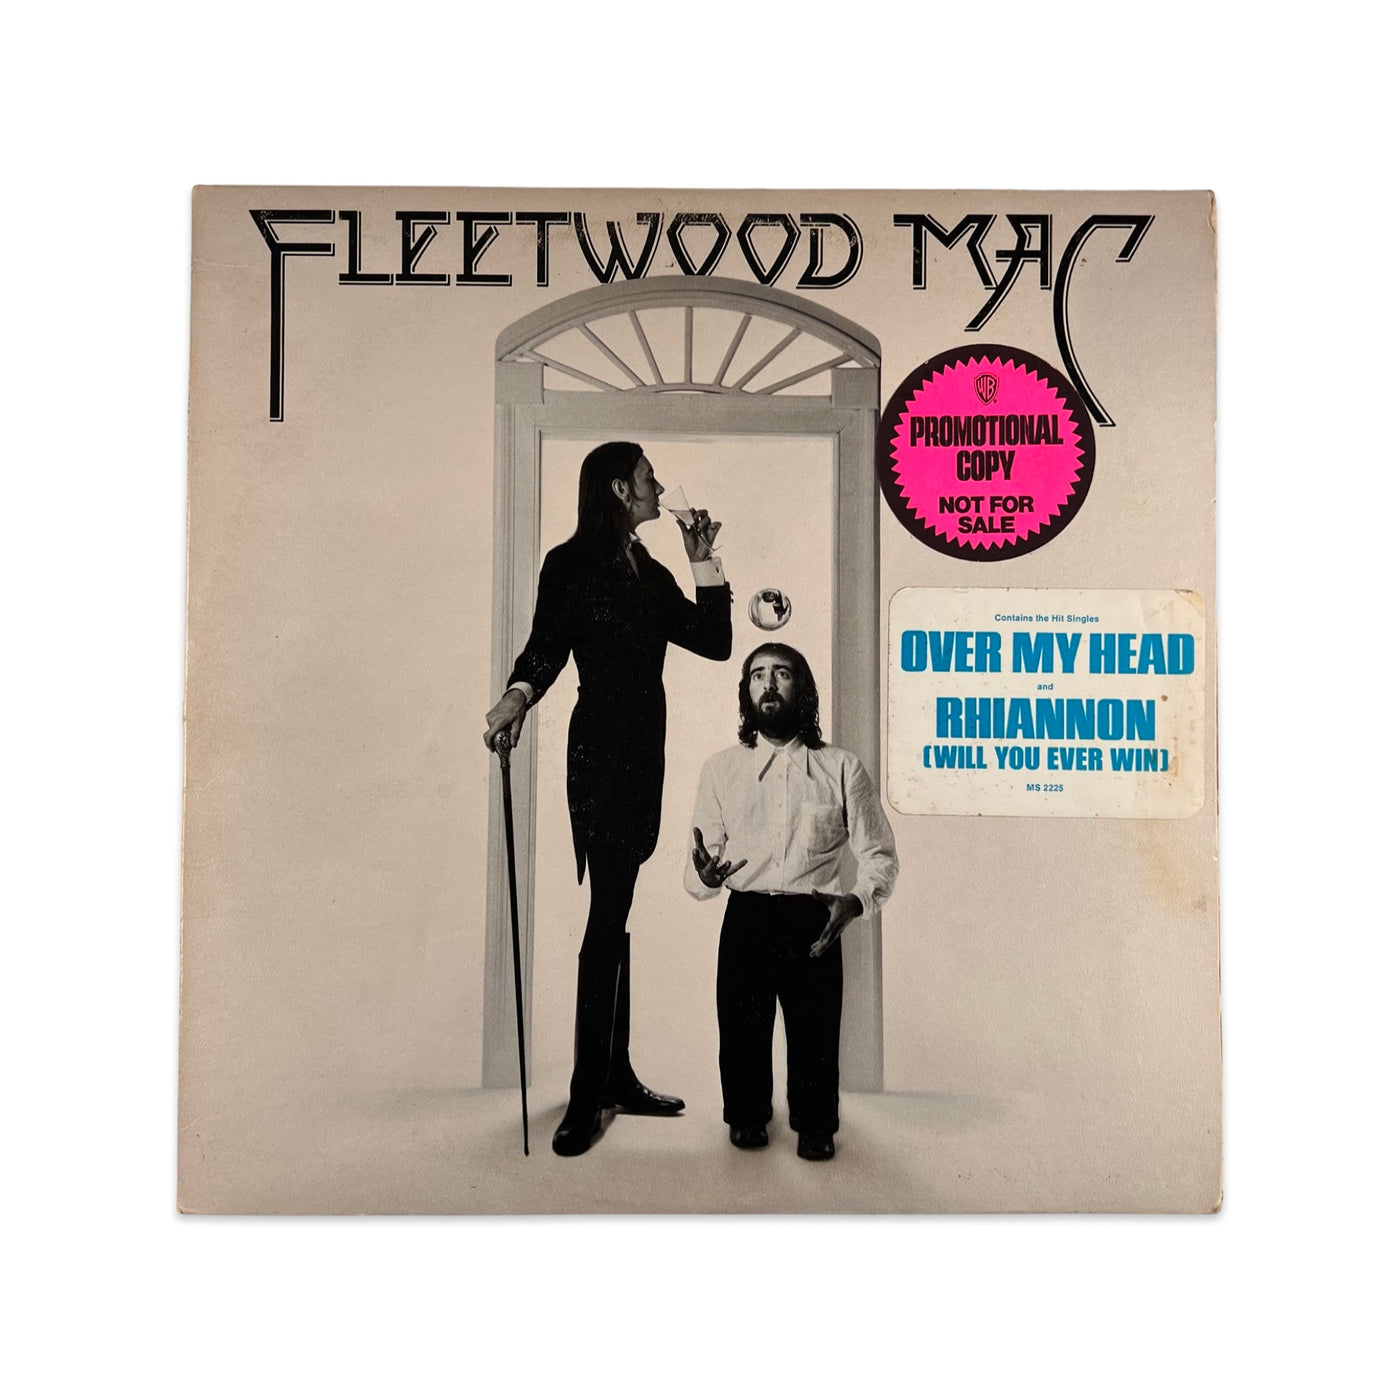 Fleetwood Mac – Fleetwood Mac - First Press Promo